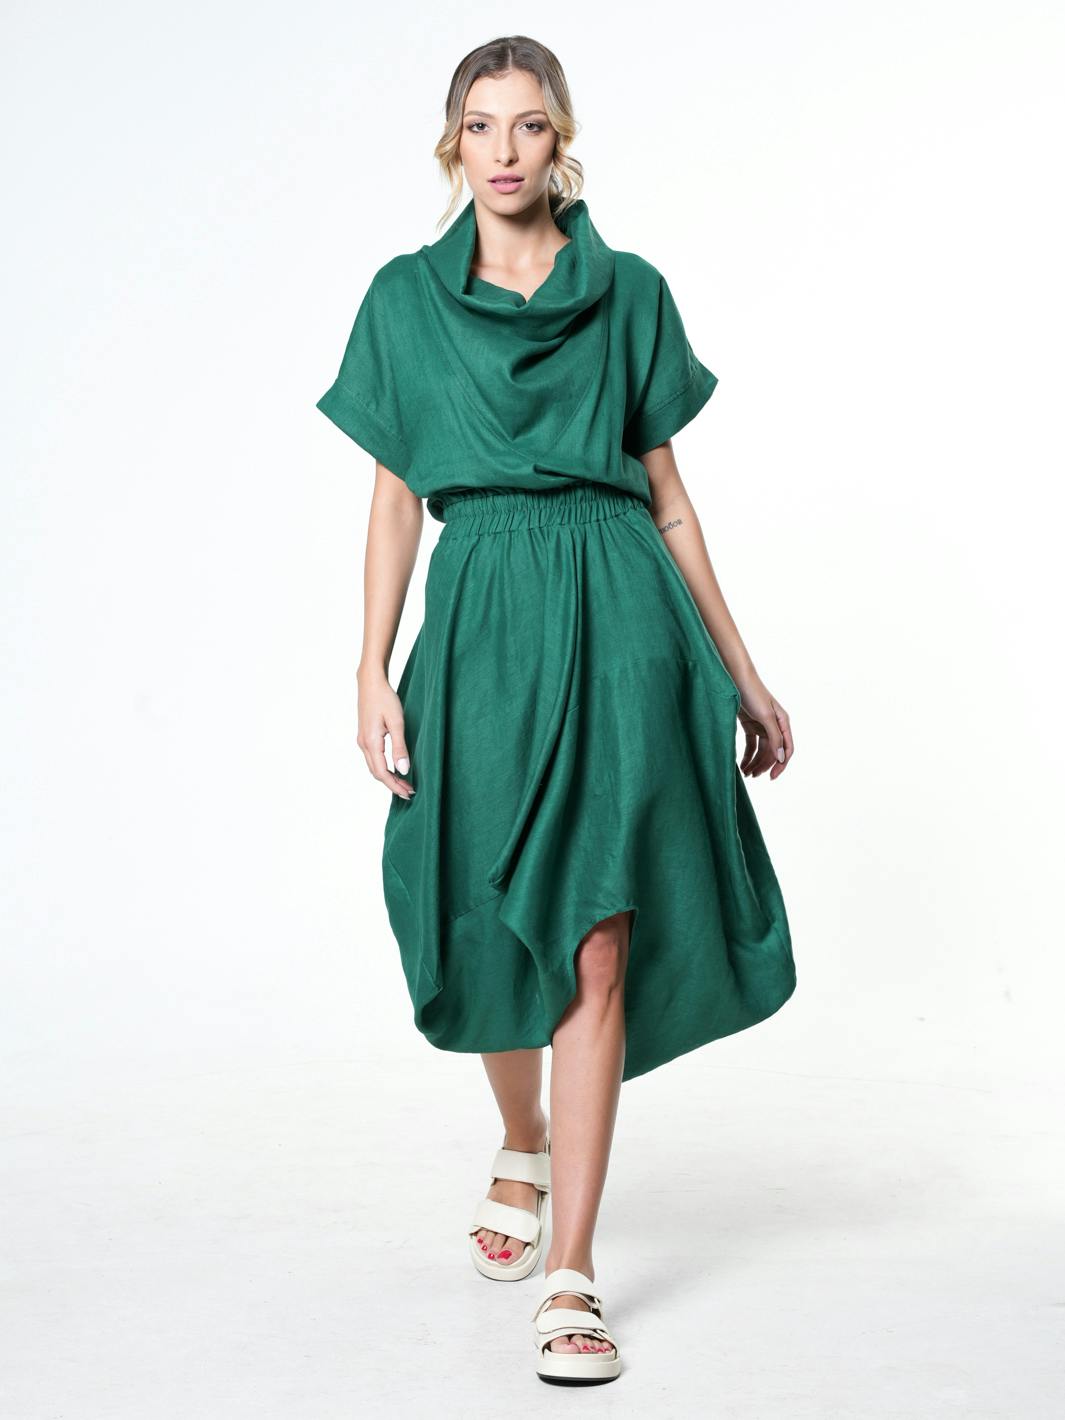 Thumbnail preview #1 for Cowl Neck Linen Dress 